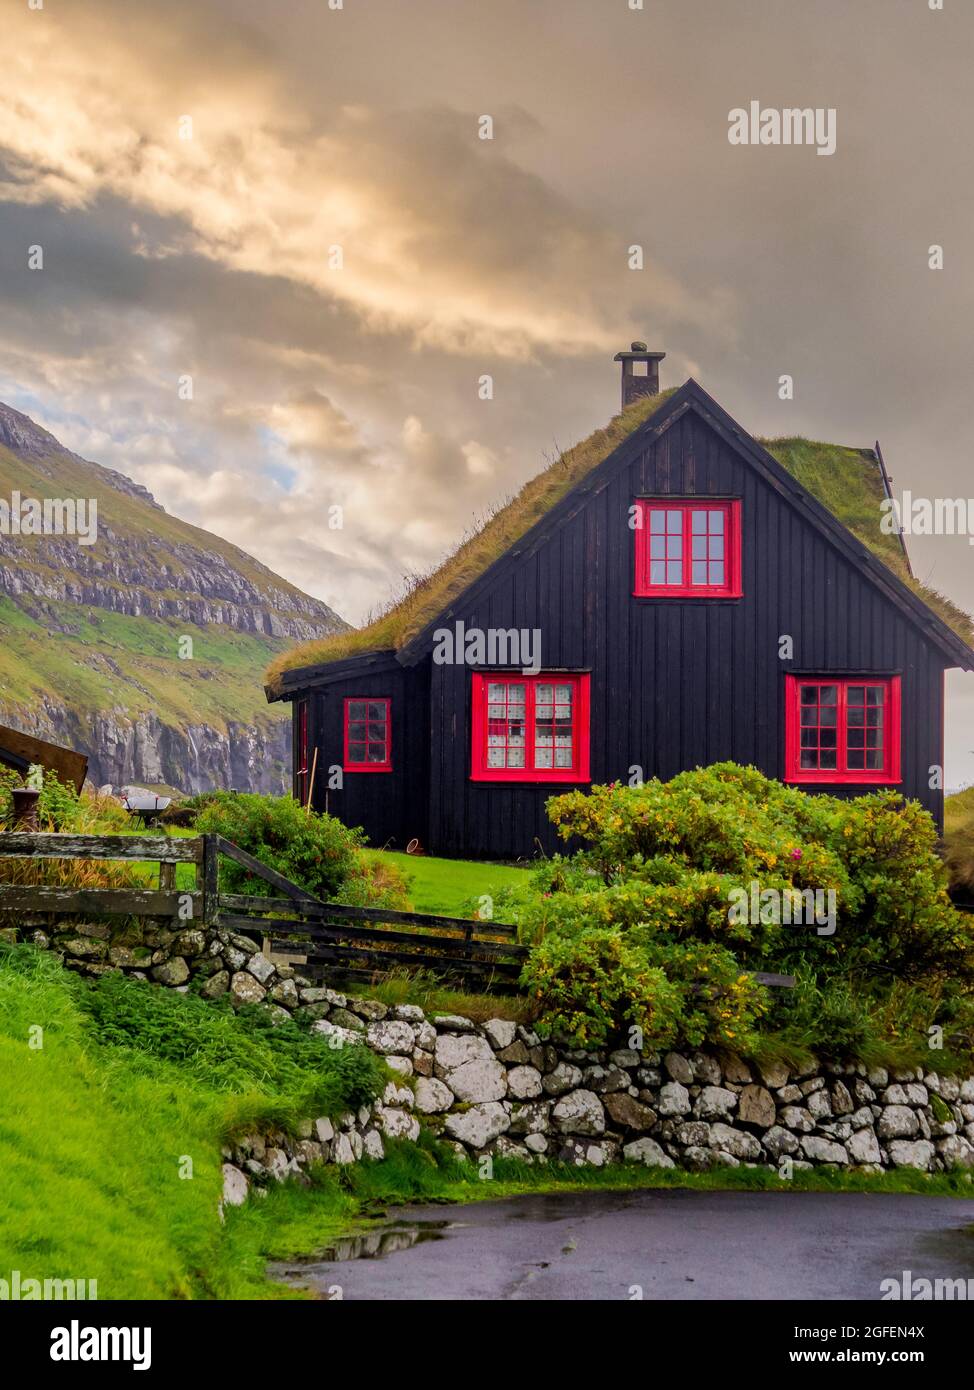 Kirkjubøur, Faroe Islands - October 2020: Typical wooden turf house with red window on Streymoy Island., Denmark, Northern Europe Stock Photo